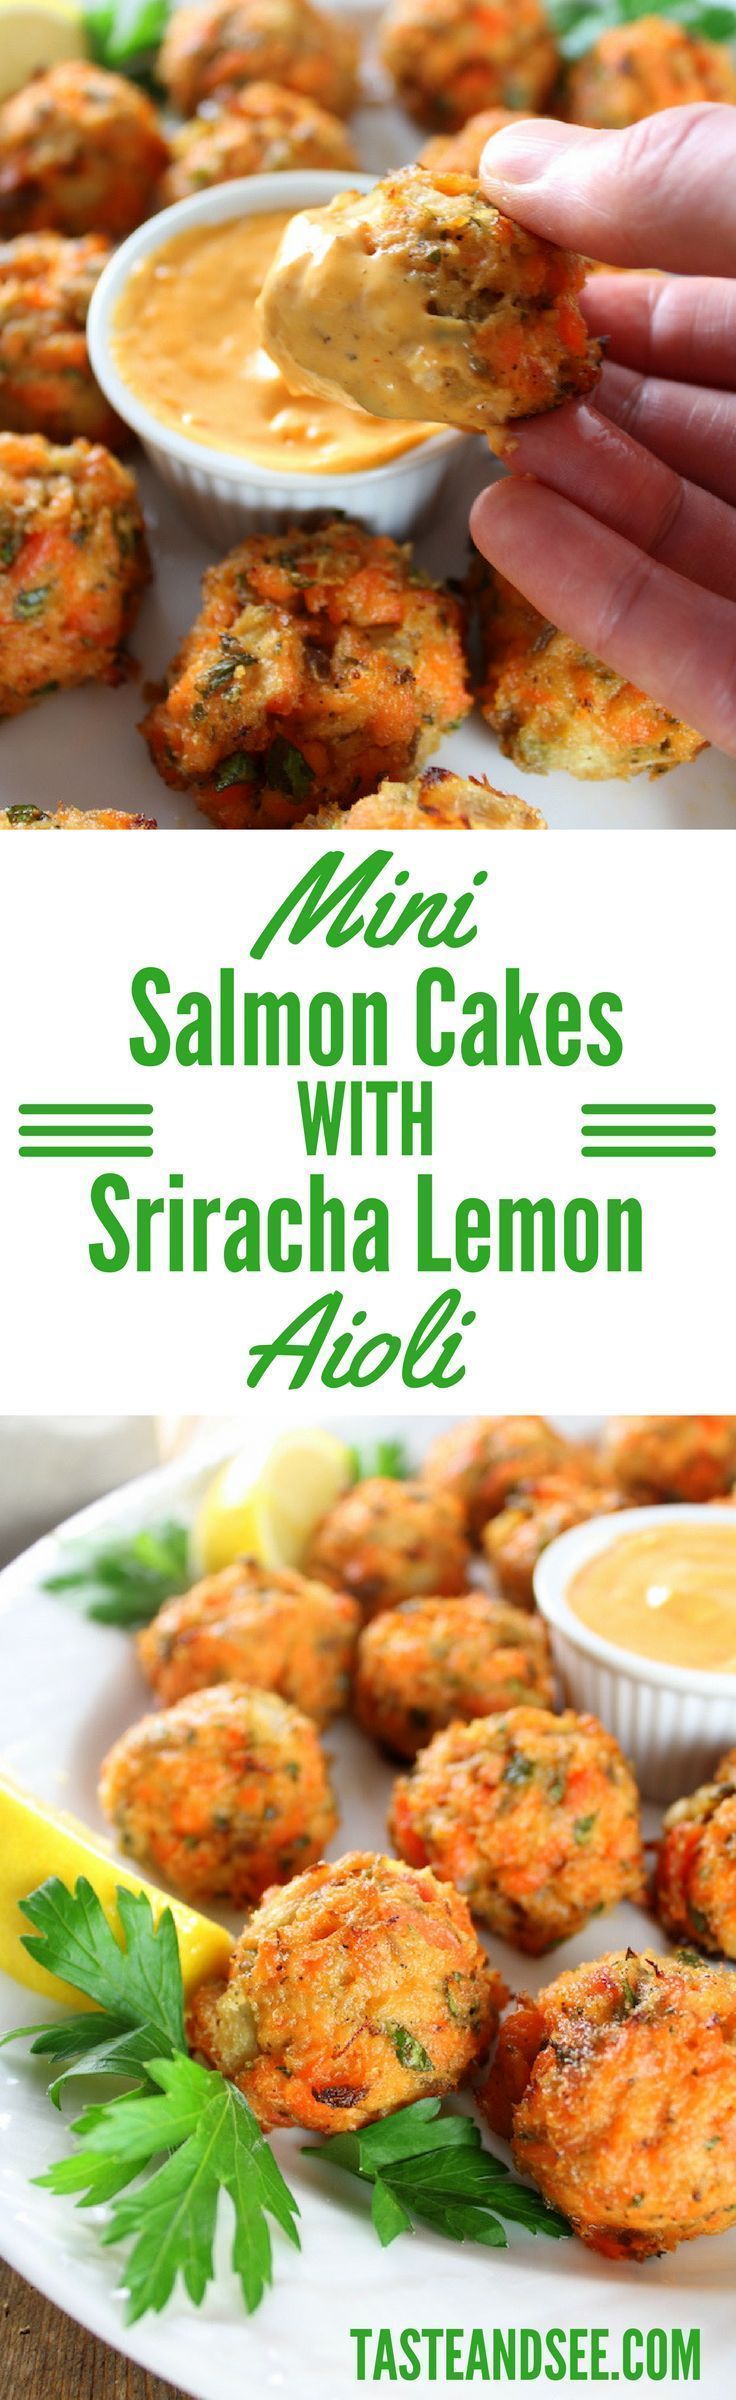 Mini Salmon Cakes with Sriracha Lemon Aioli – the perfect appetizer for holiday entertaining!  http://tasteandsee.com